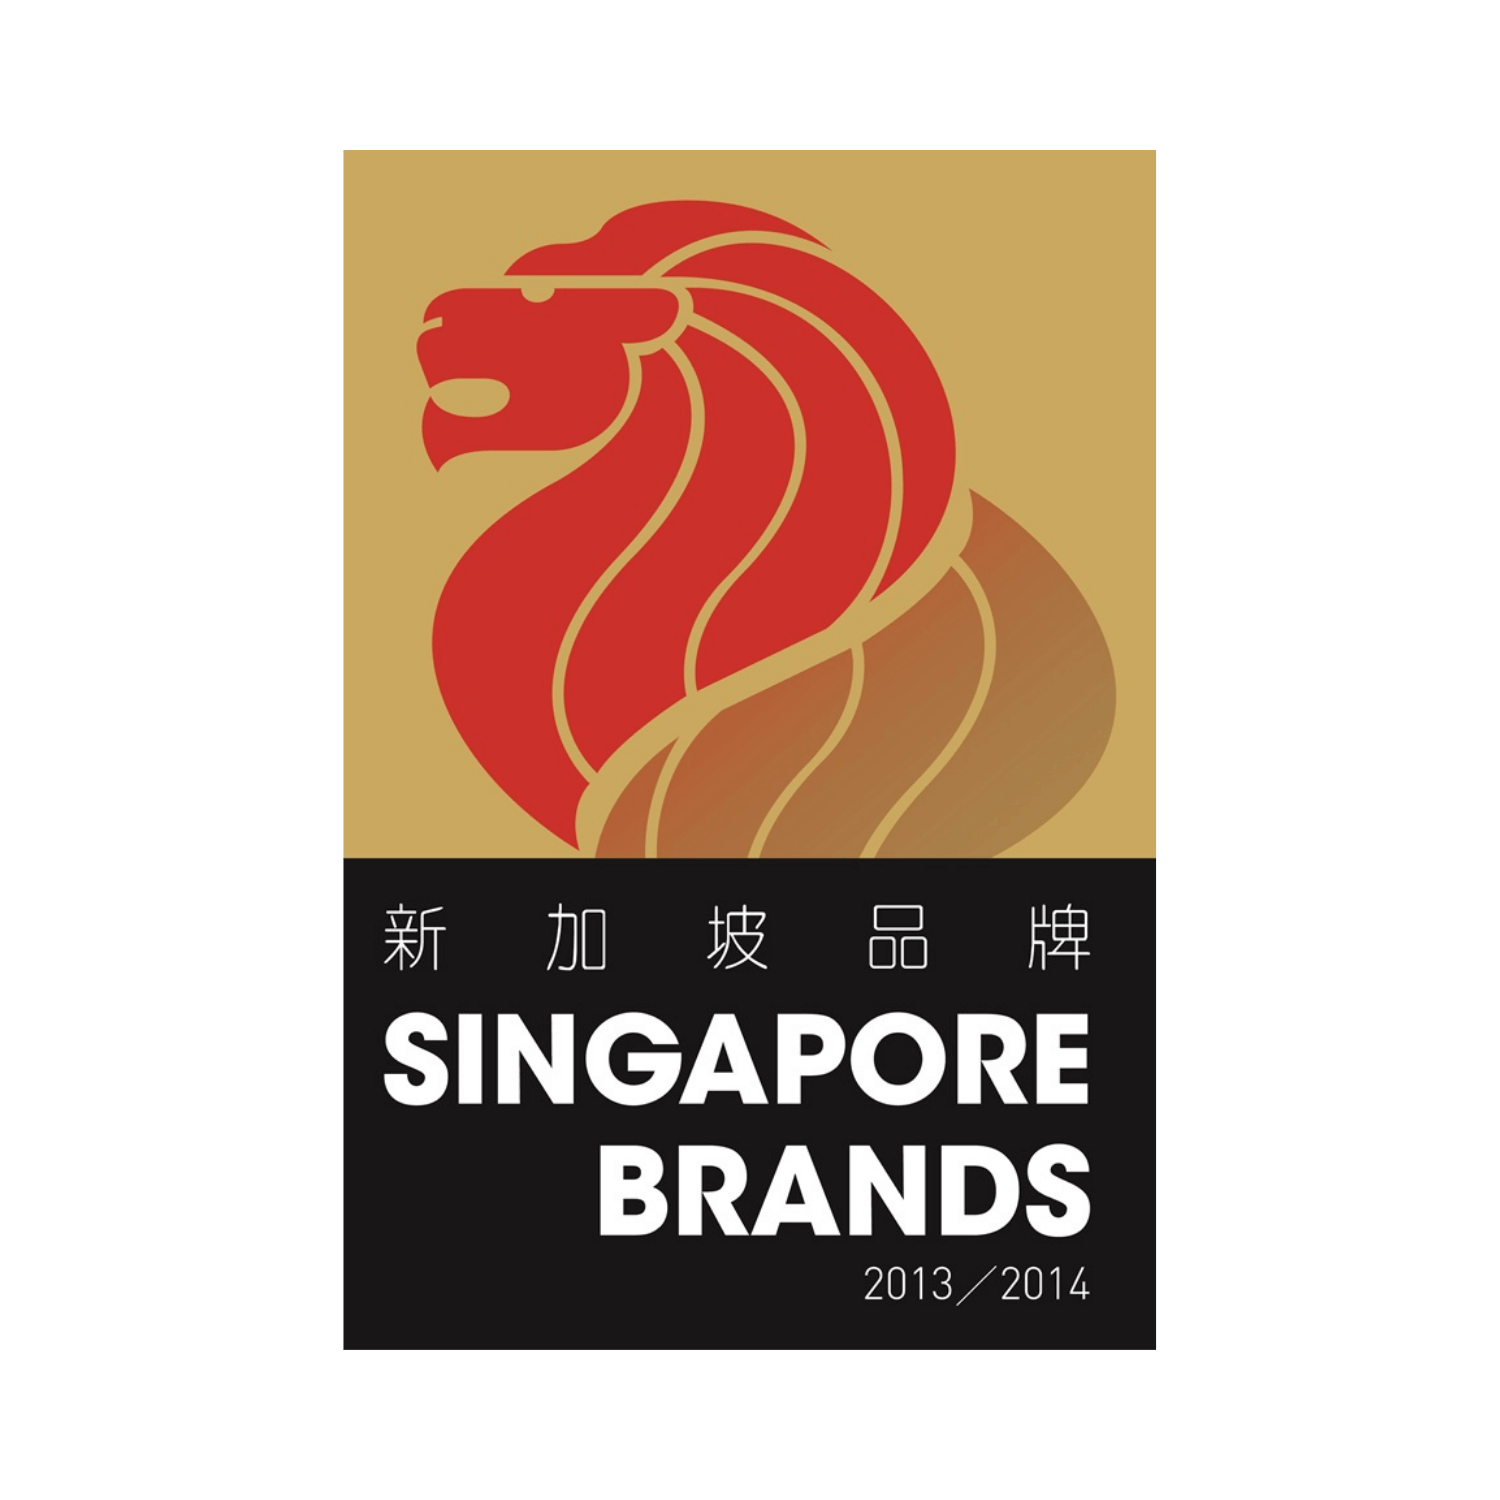 International Investigators Pte Ltd was awarded the Singapore Brands Award